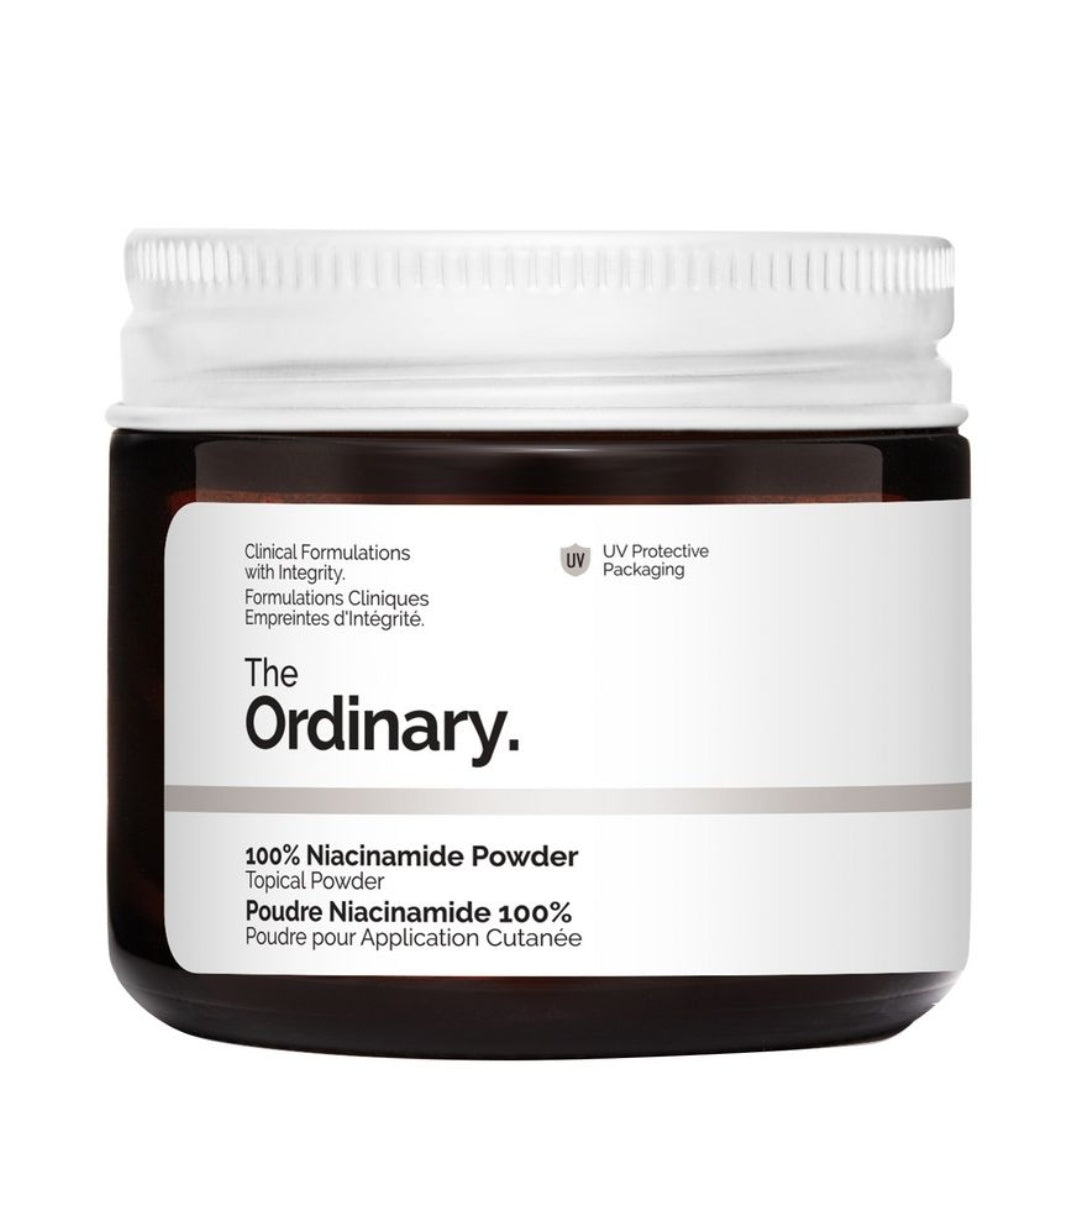 THE ORDINARY

Niacinamide Powder( 20g)